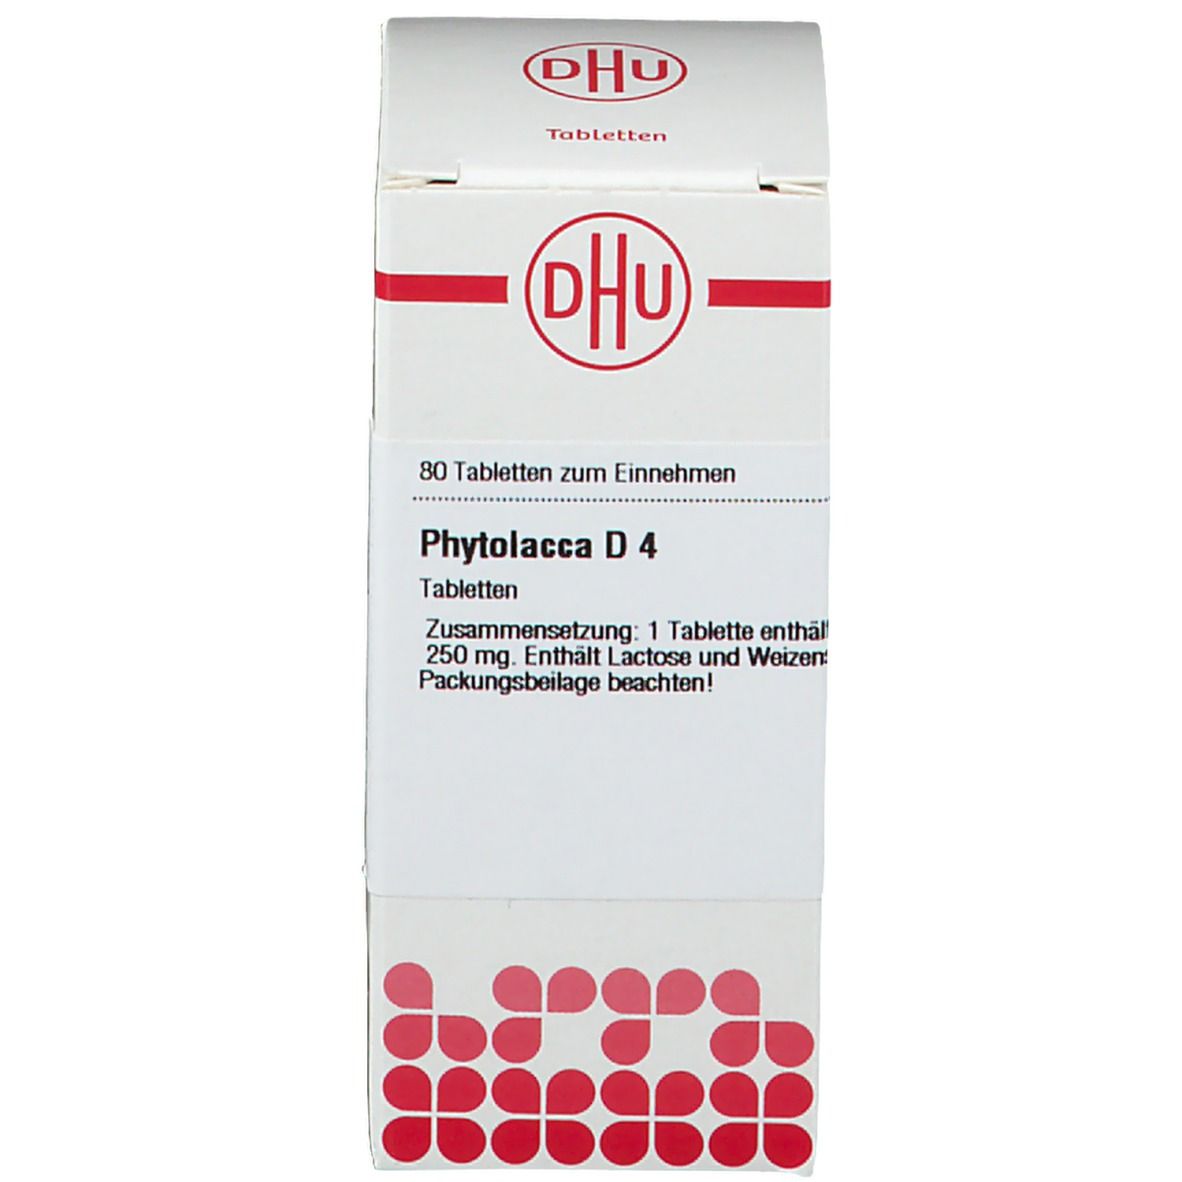 DHU Phytolacca D4